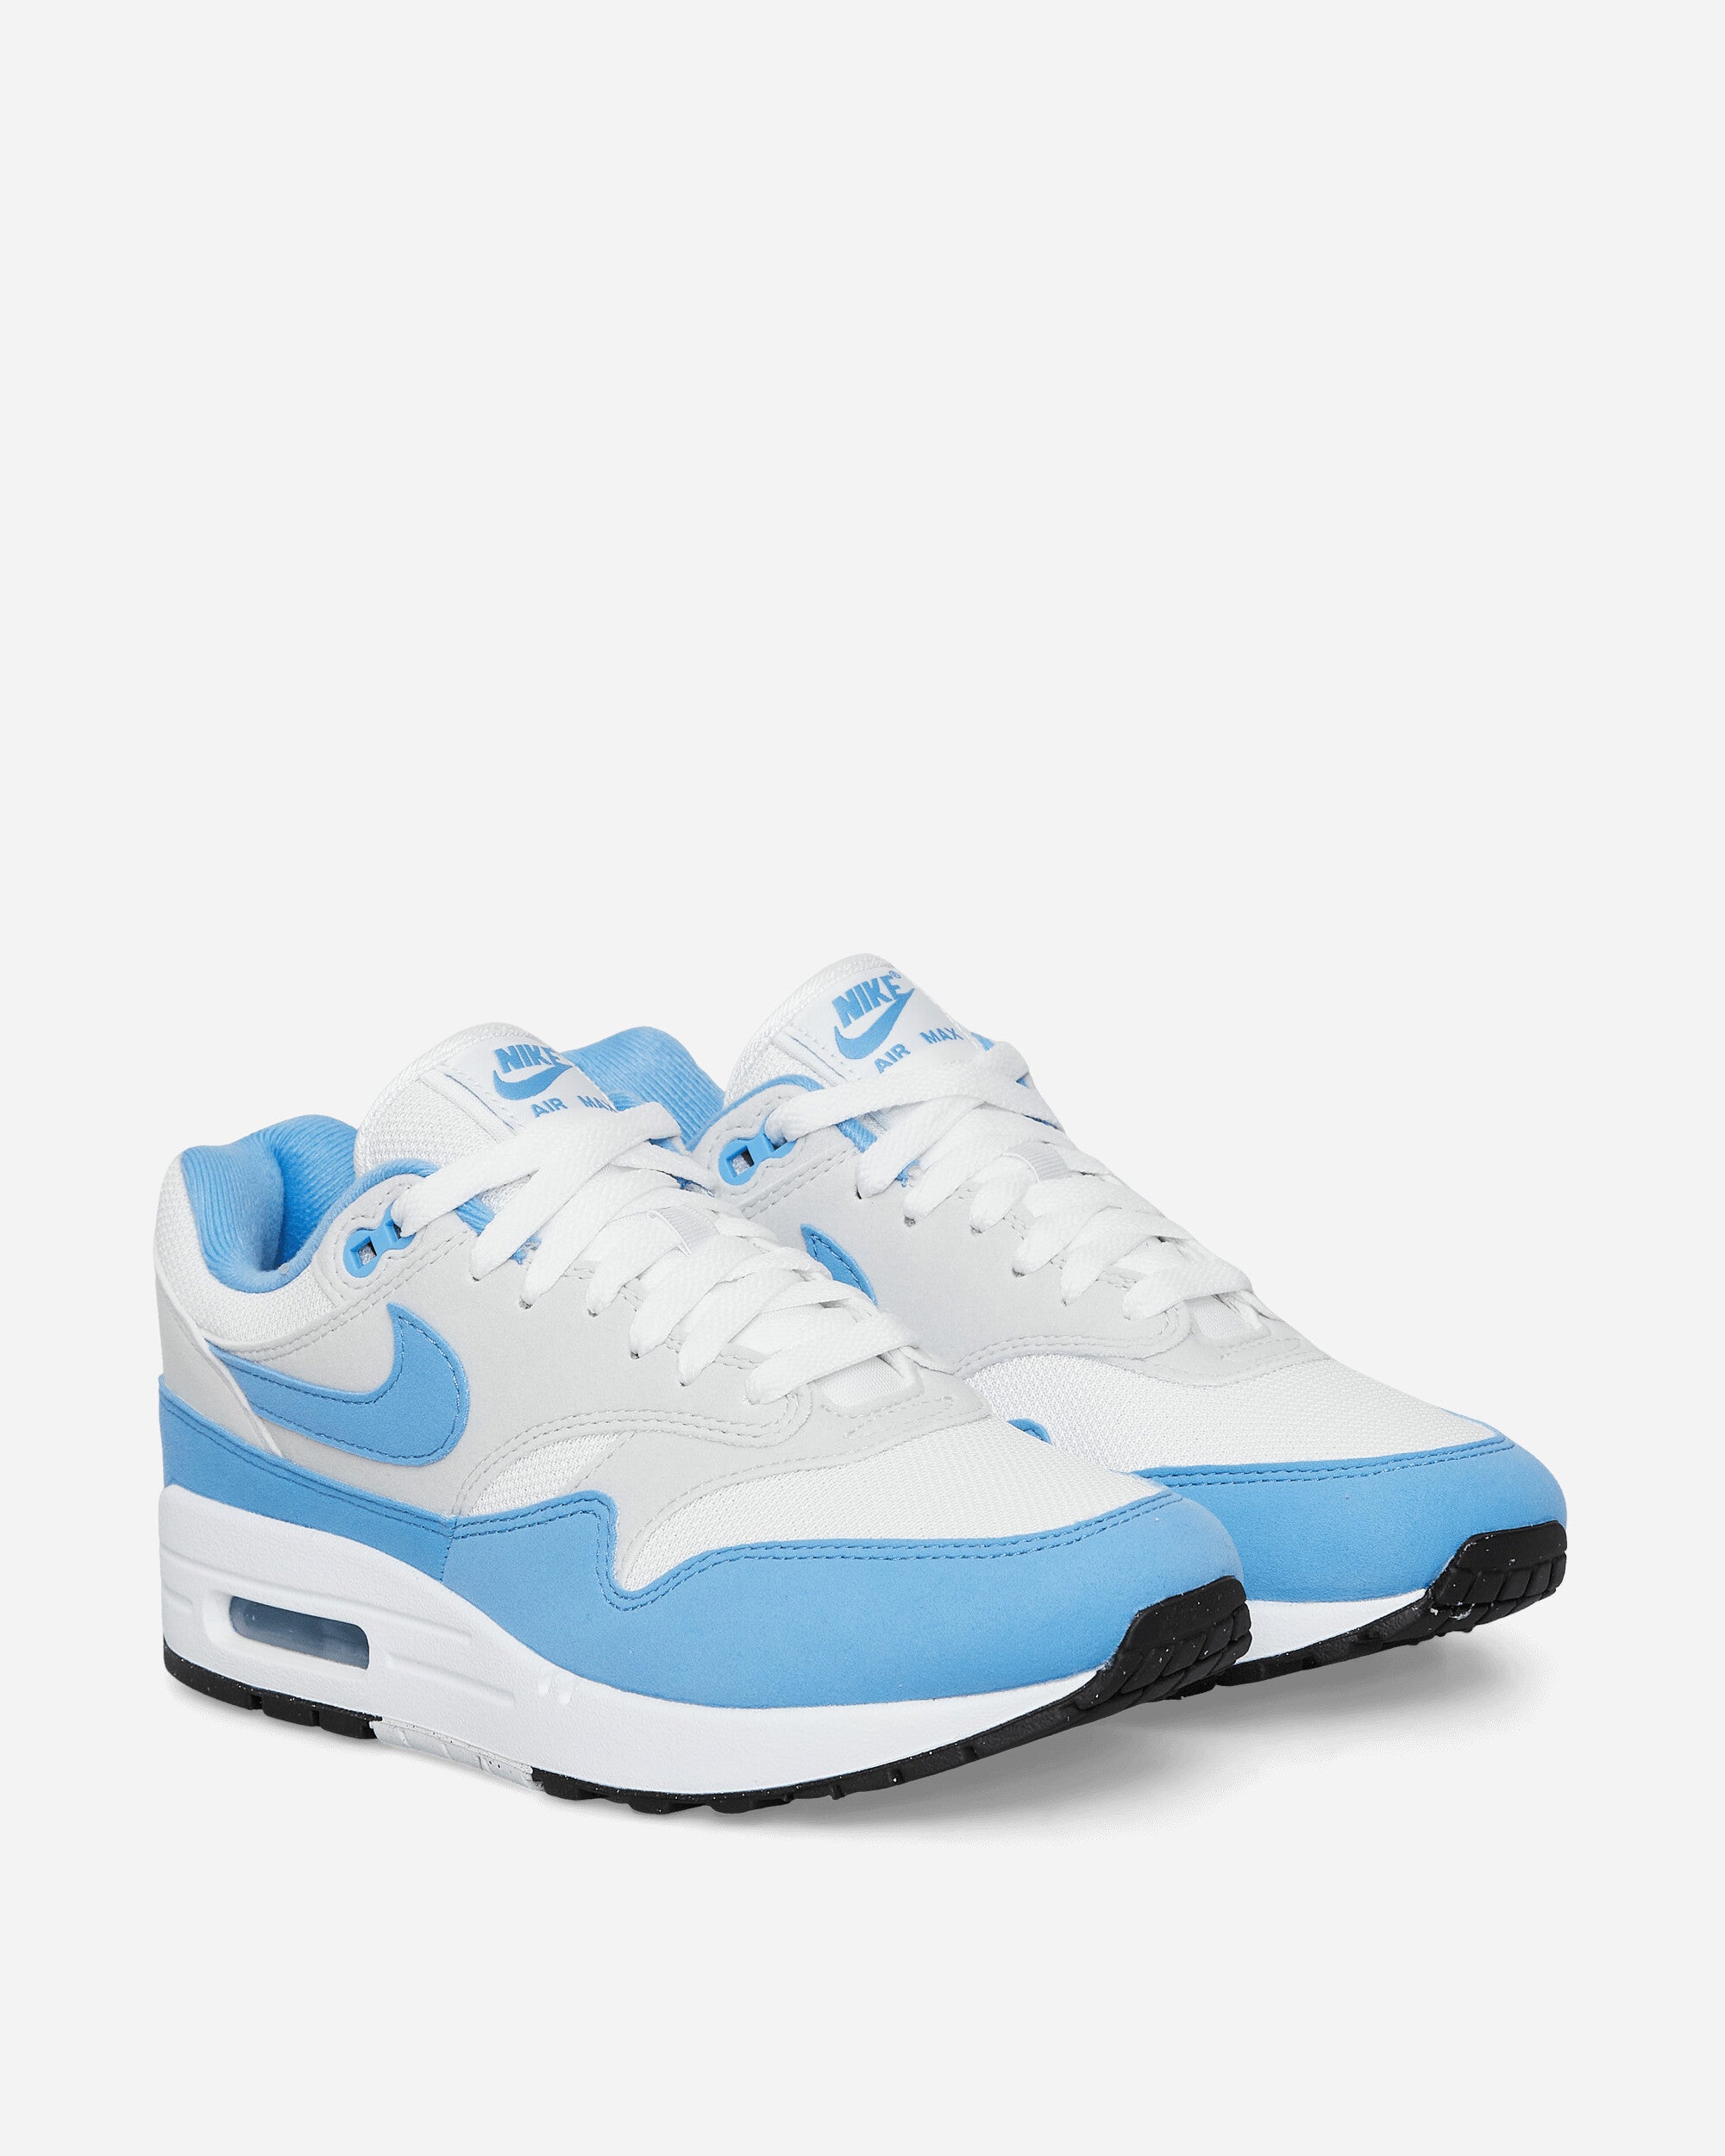 Air Max 1 Sneakers White / Photon Dust / University Blue